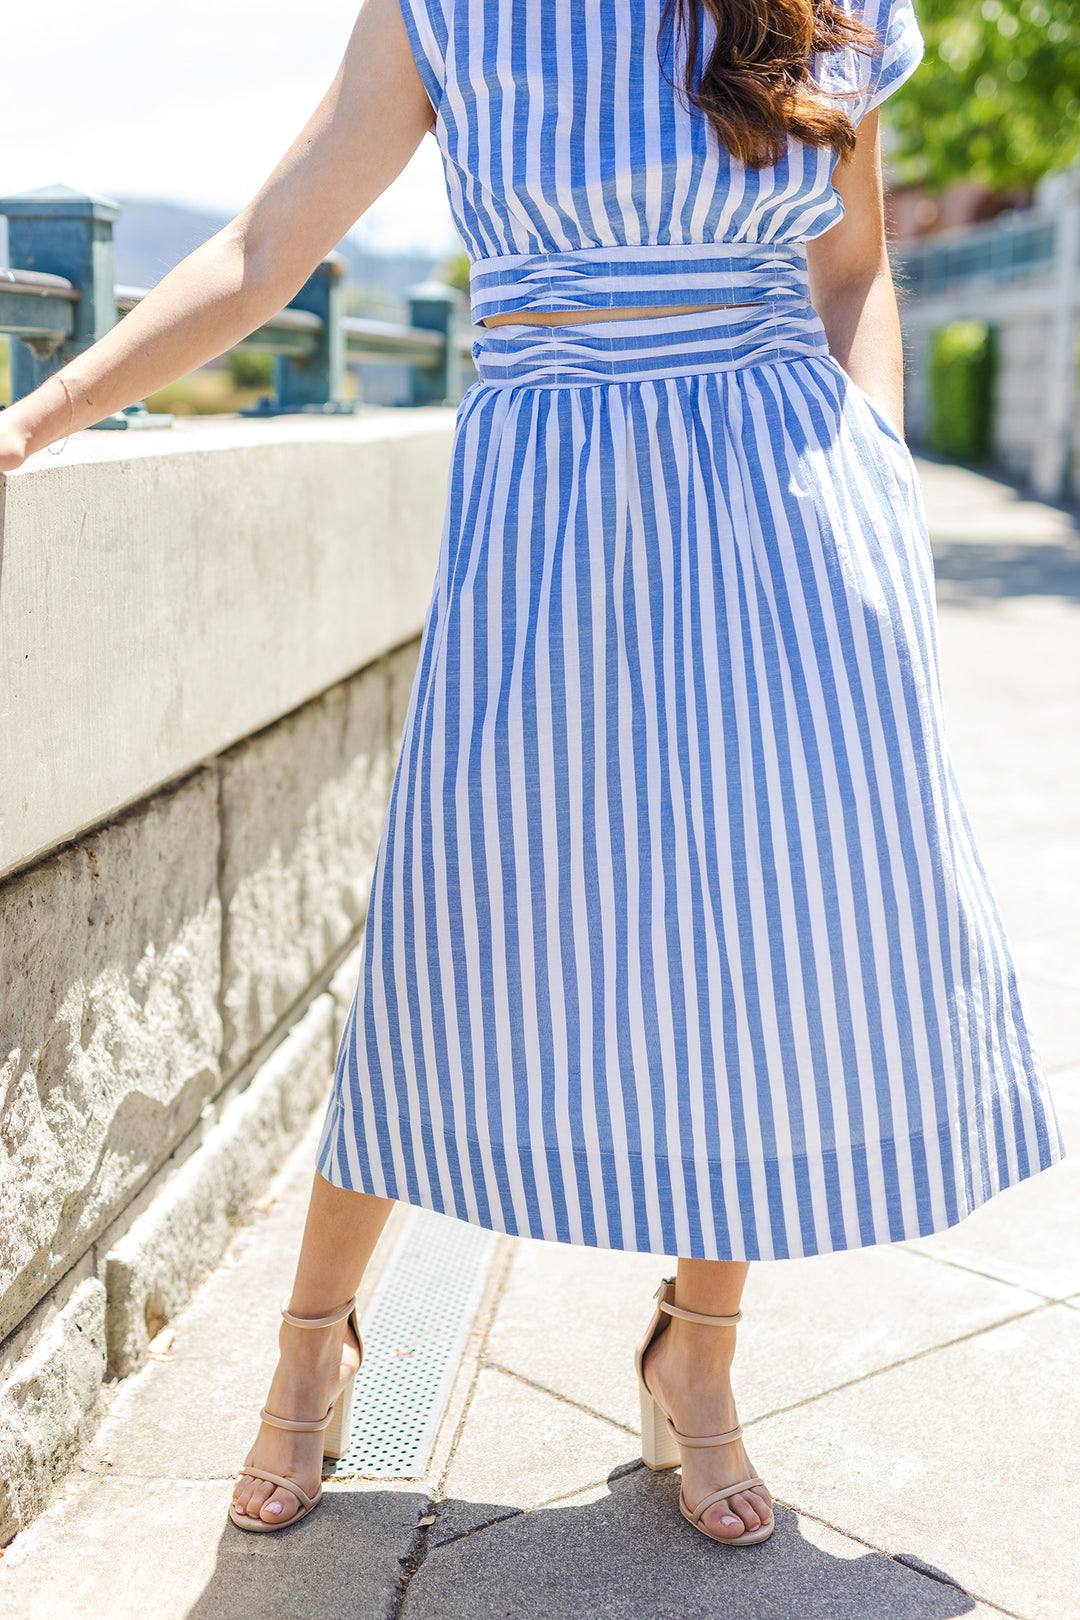 The Memory Lane Striped Midi Skirt